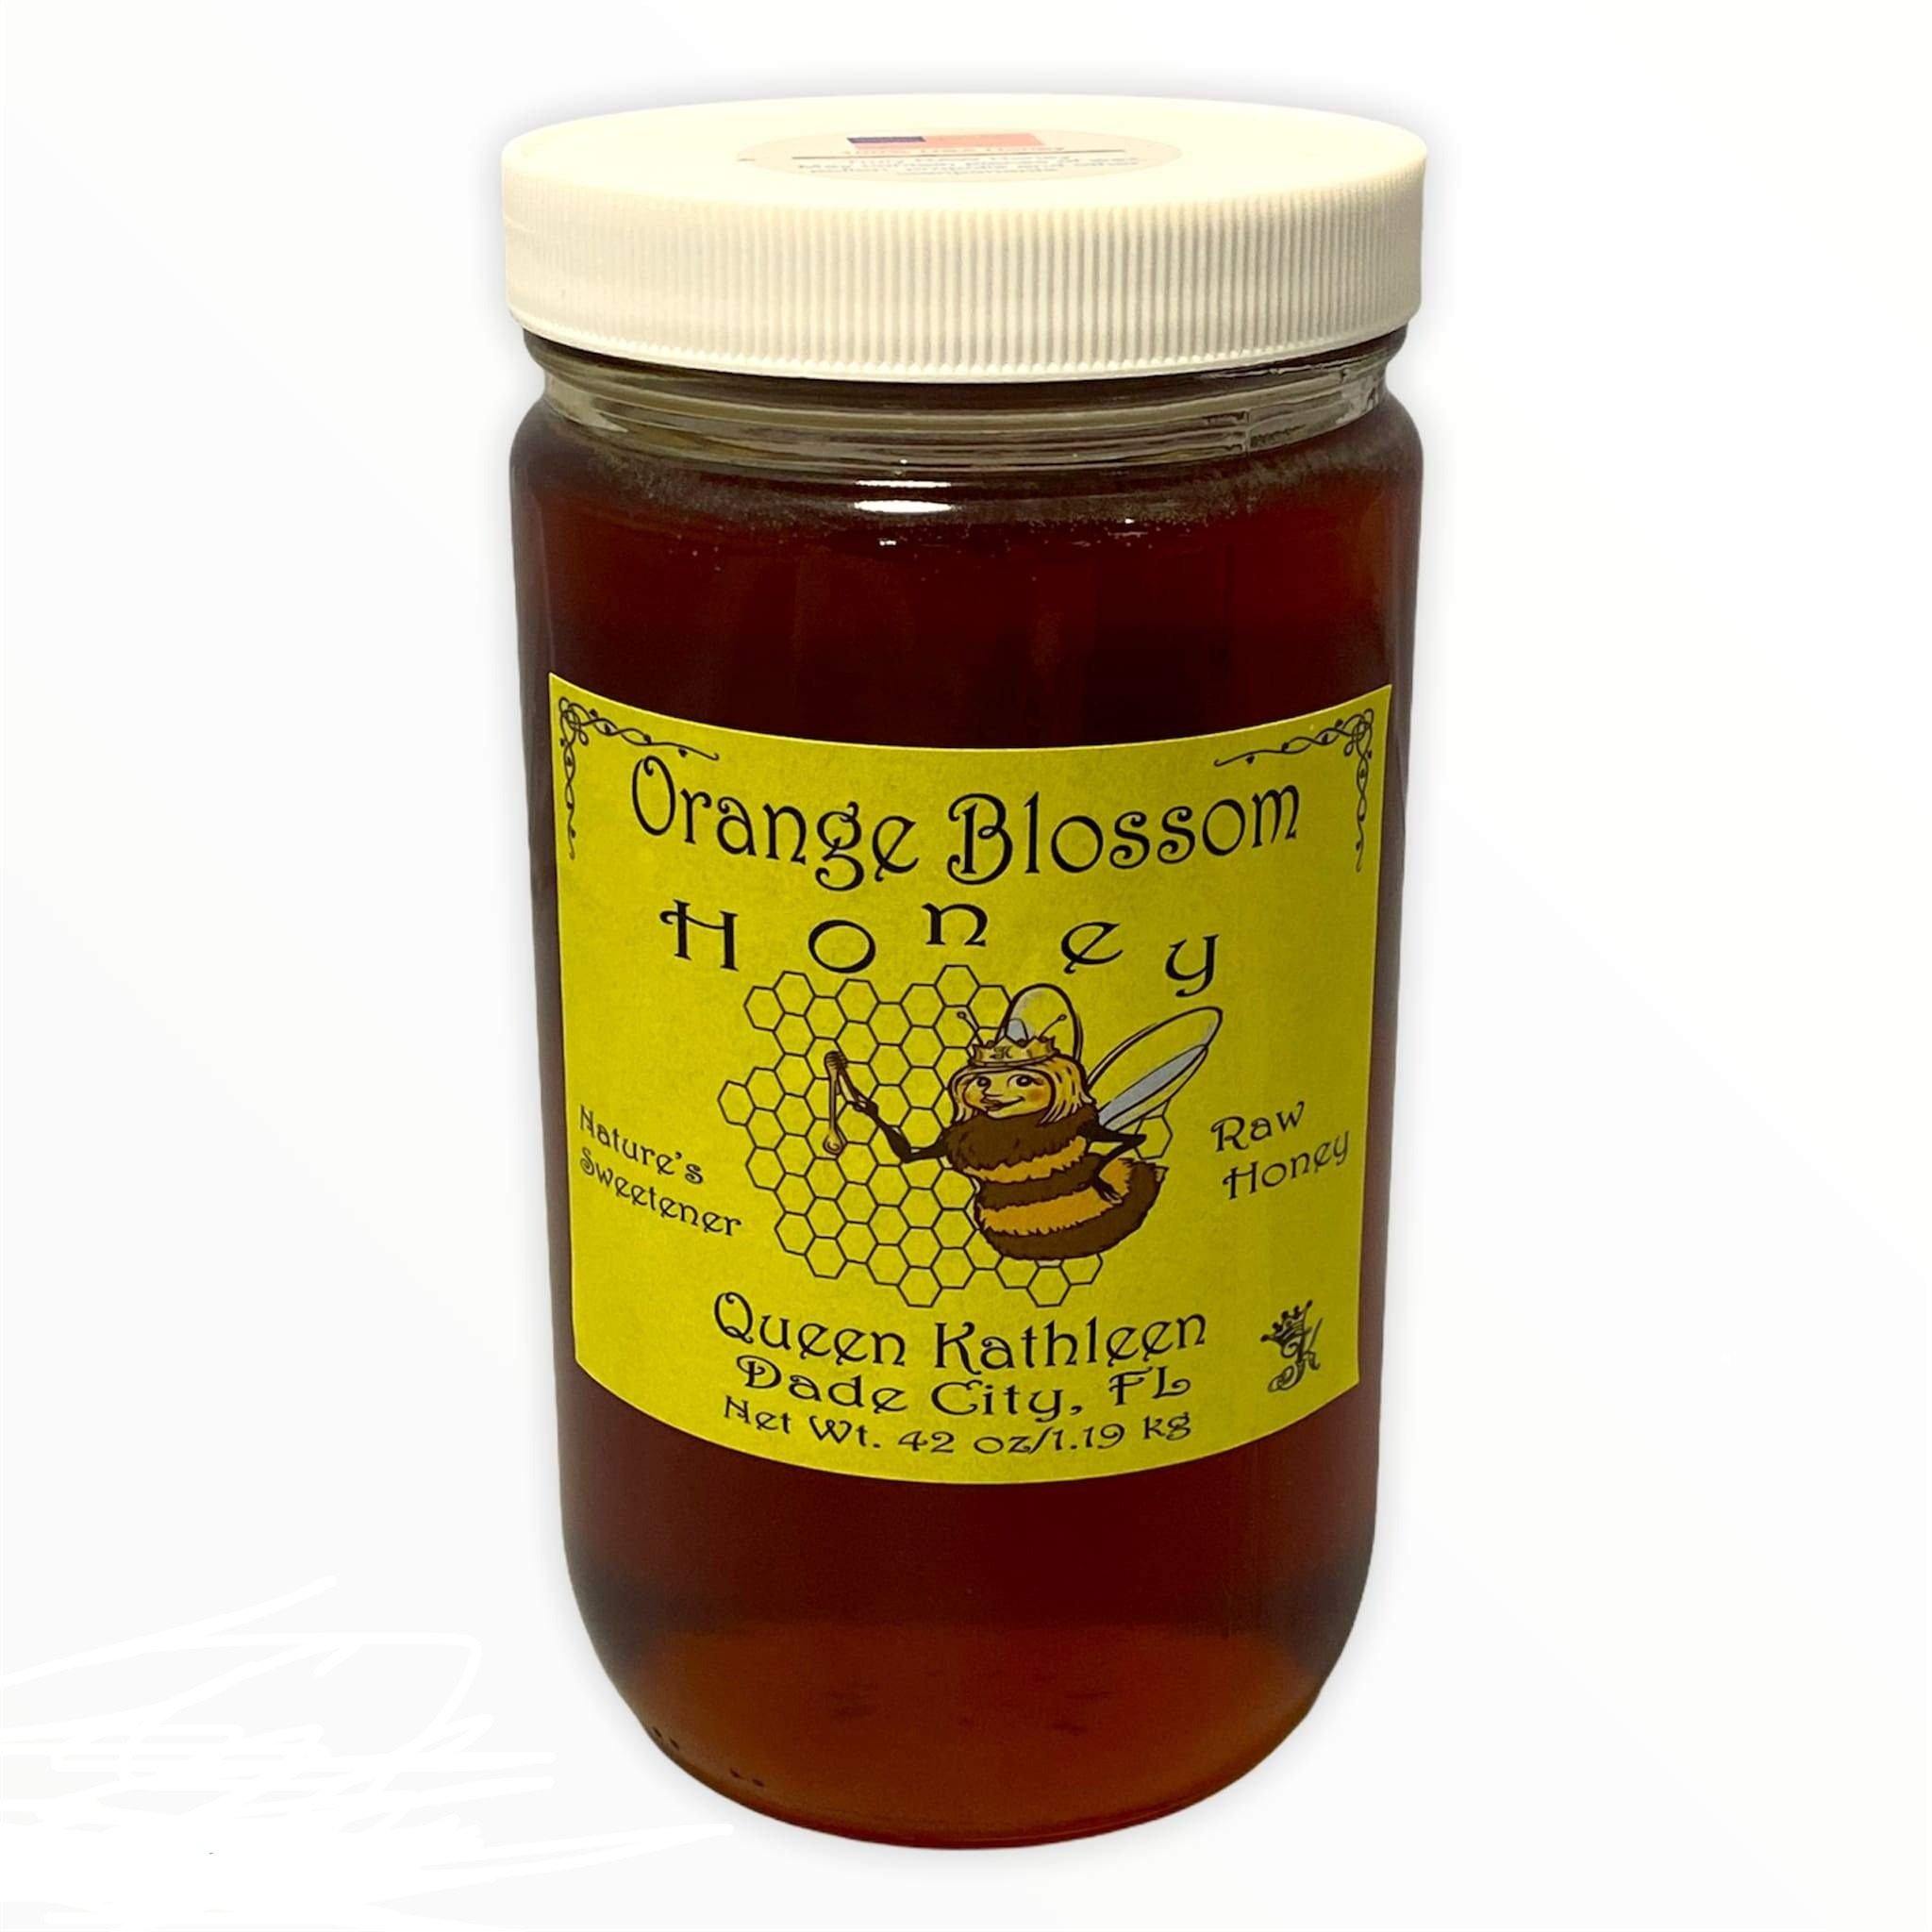 Queen Kathleen Orange Blossom Honey Jar 42oz